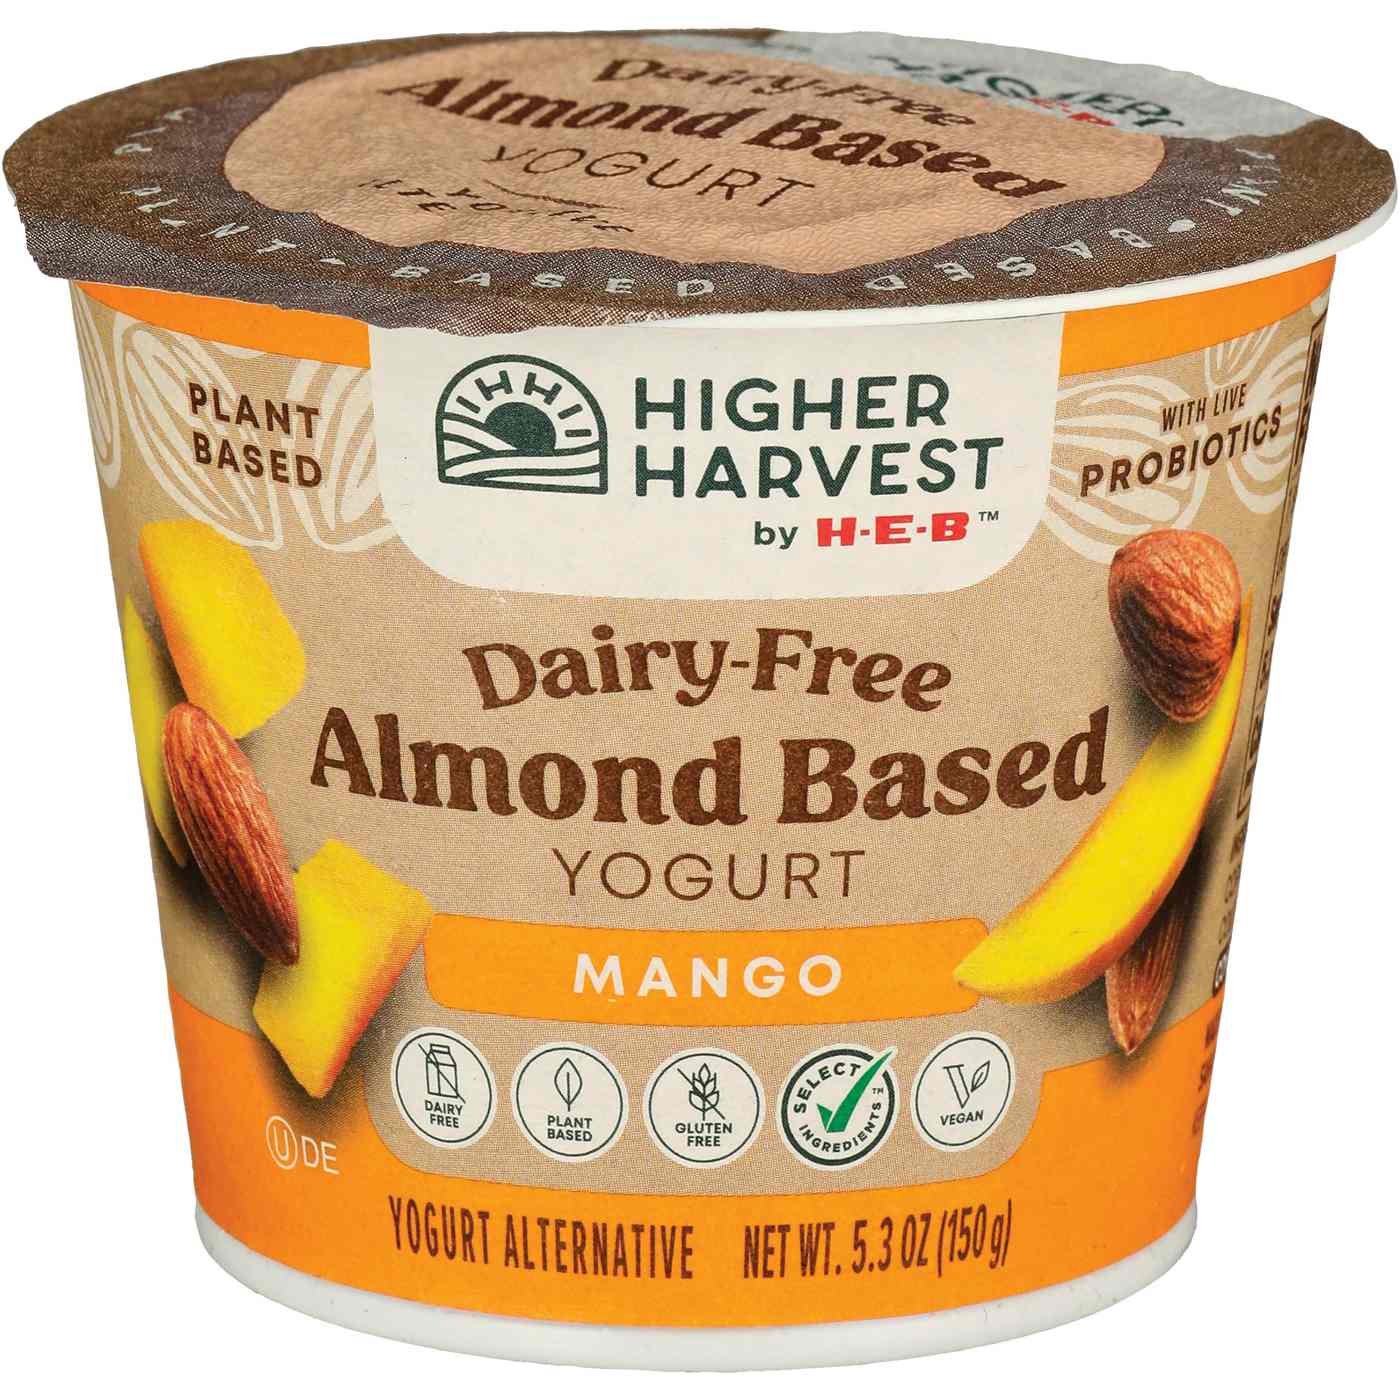 Higher Harvest by H-E-B Dairy-Free Almond-Based Yogurt – Mango; image 2 of 3